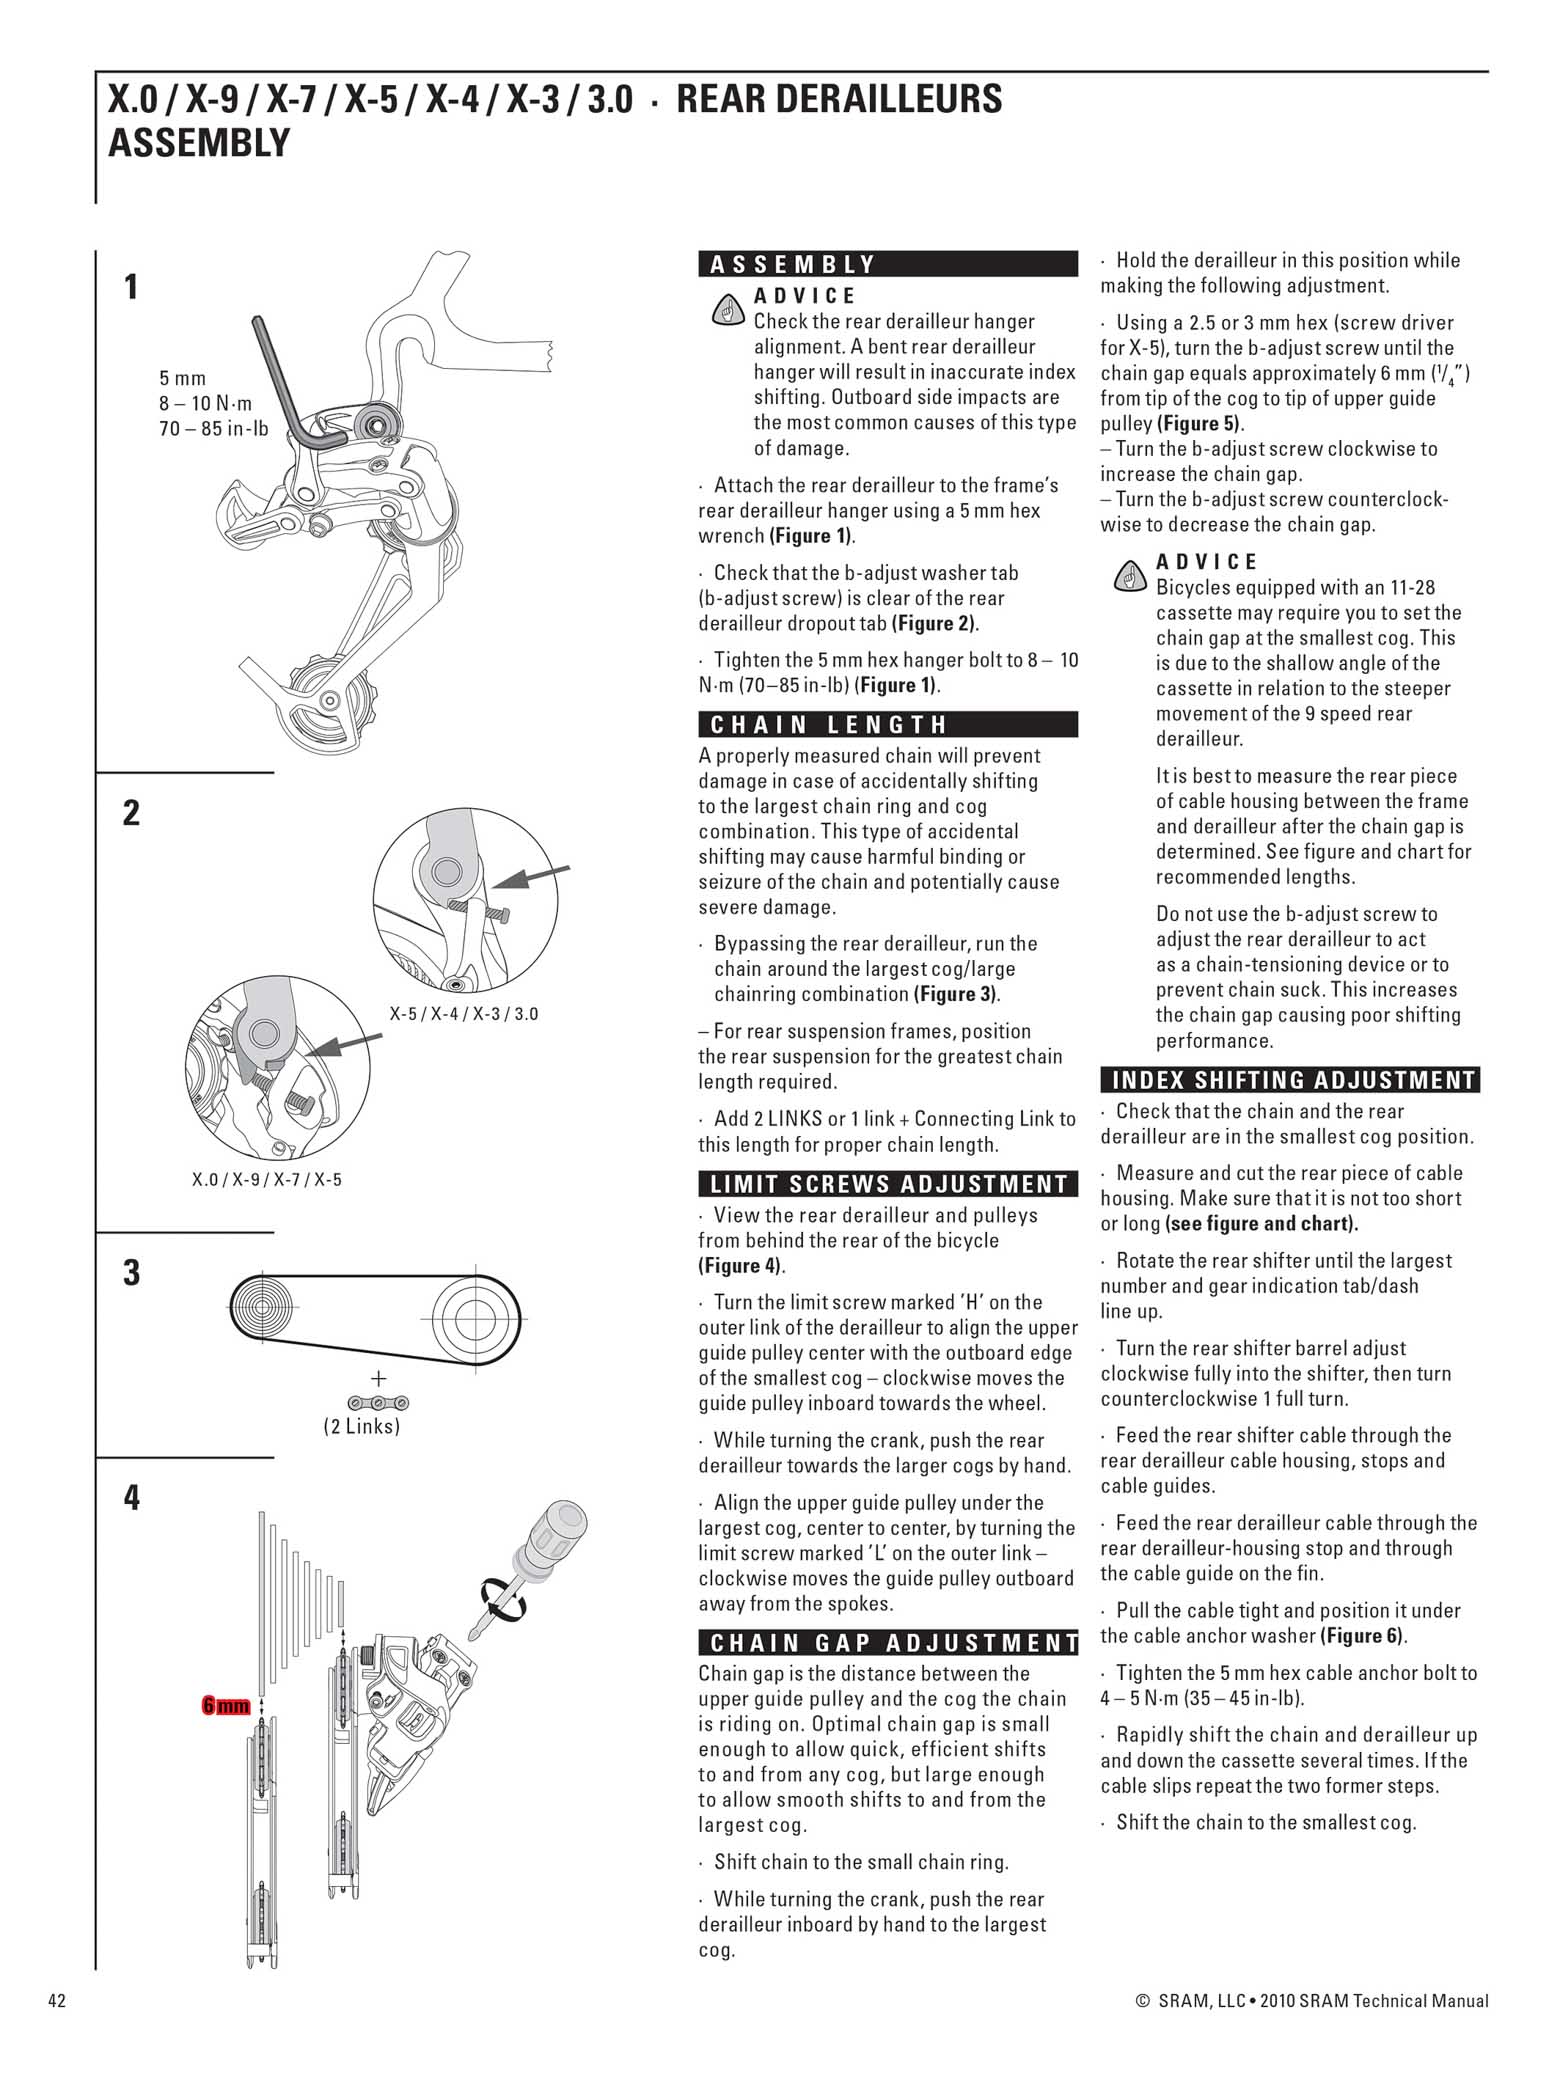 SRAM Technical Manual 2010 page 042 main image